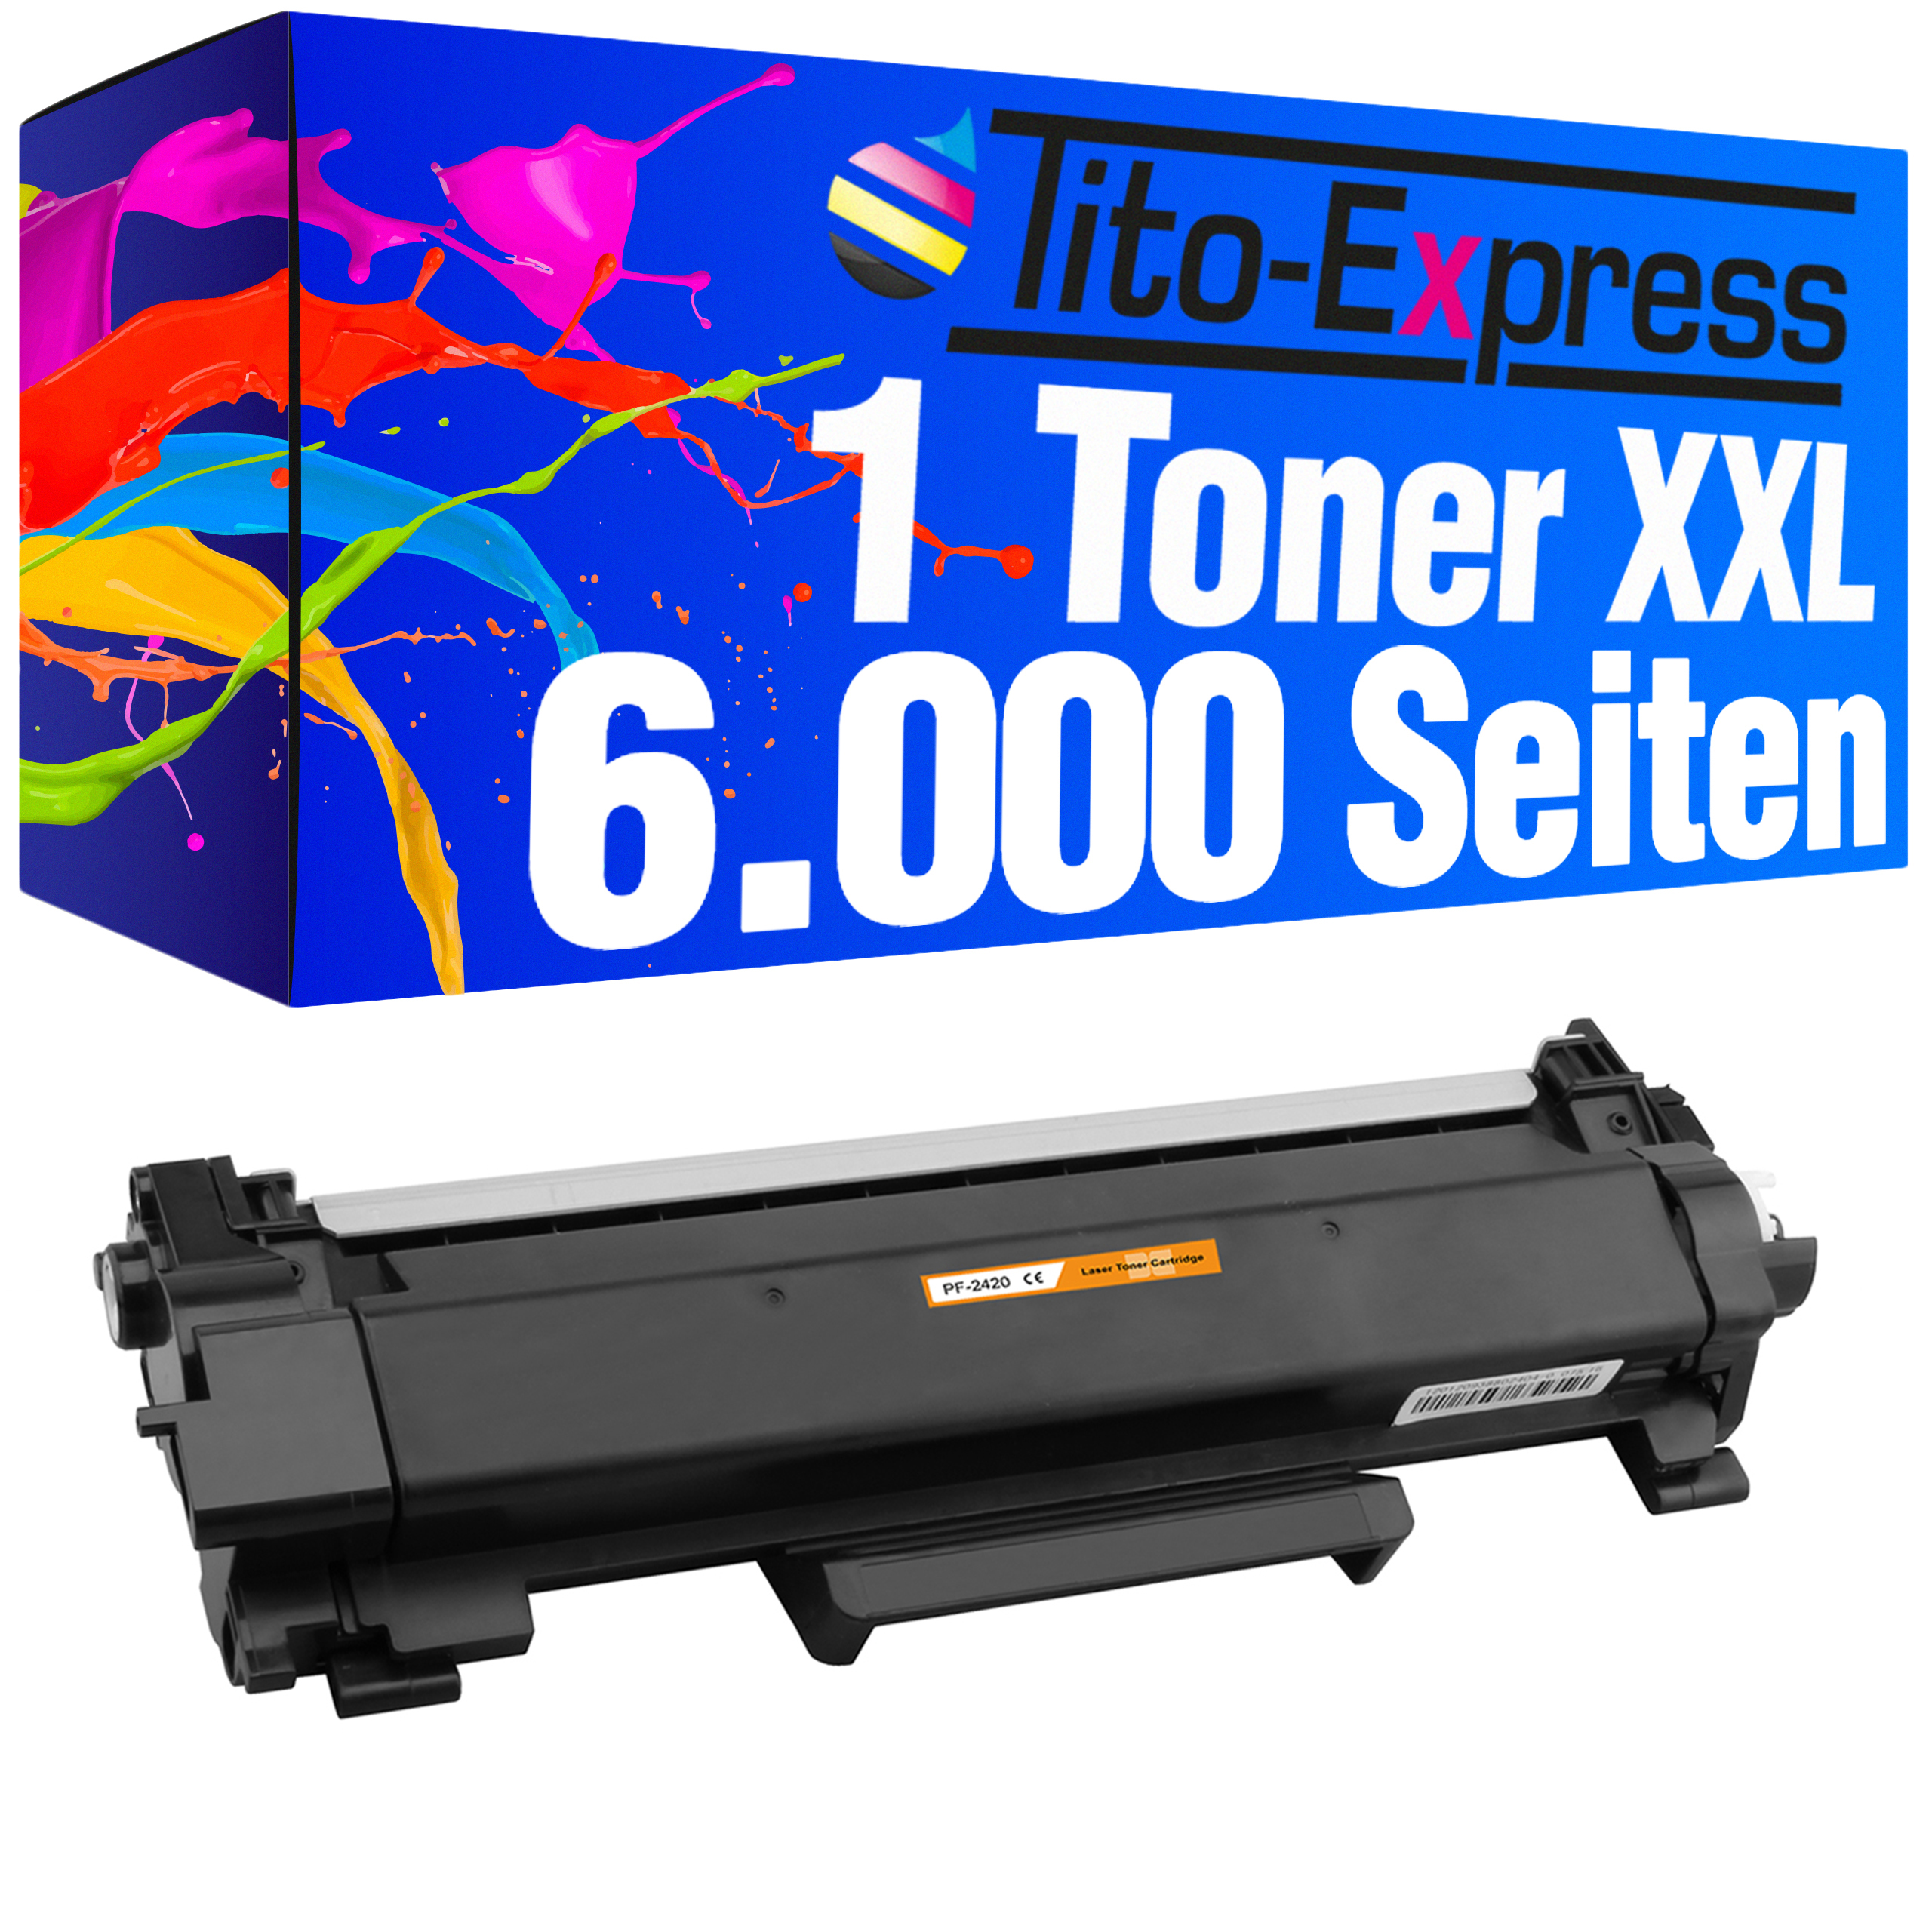 TITO-EXPRESS PLATINUMSERIE 1 (TN-2420) TN-2420 ersetzt Toner Super-XL Toner Brother Black